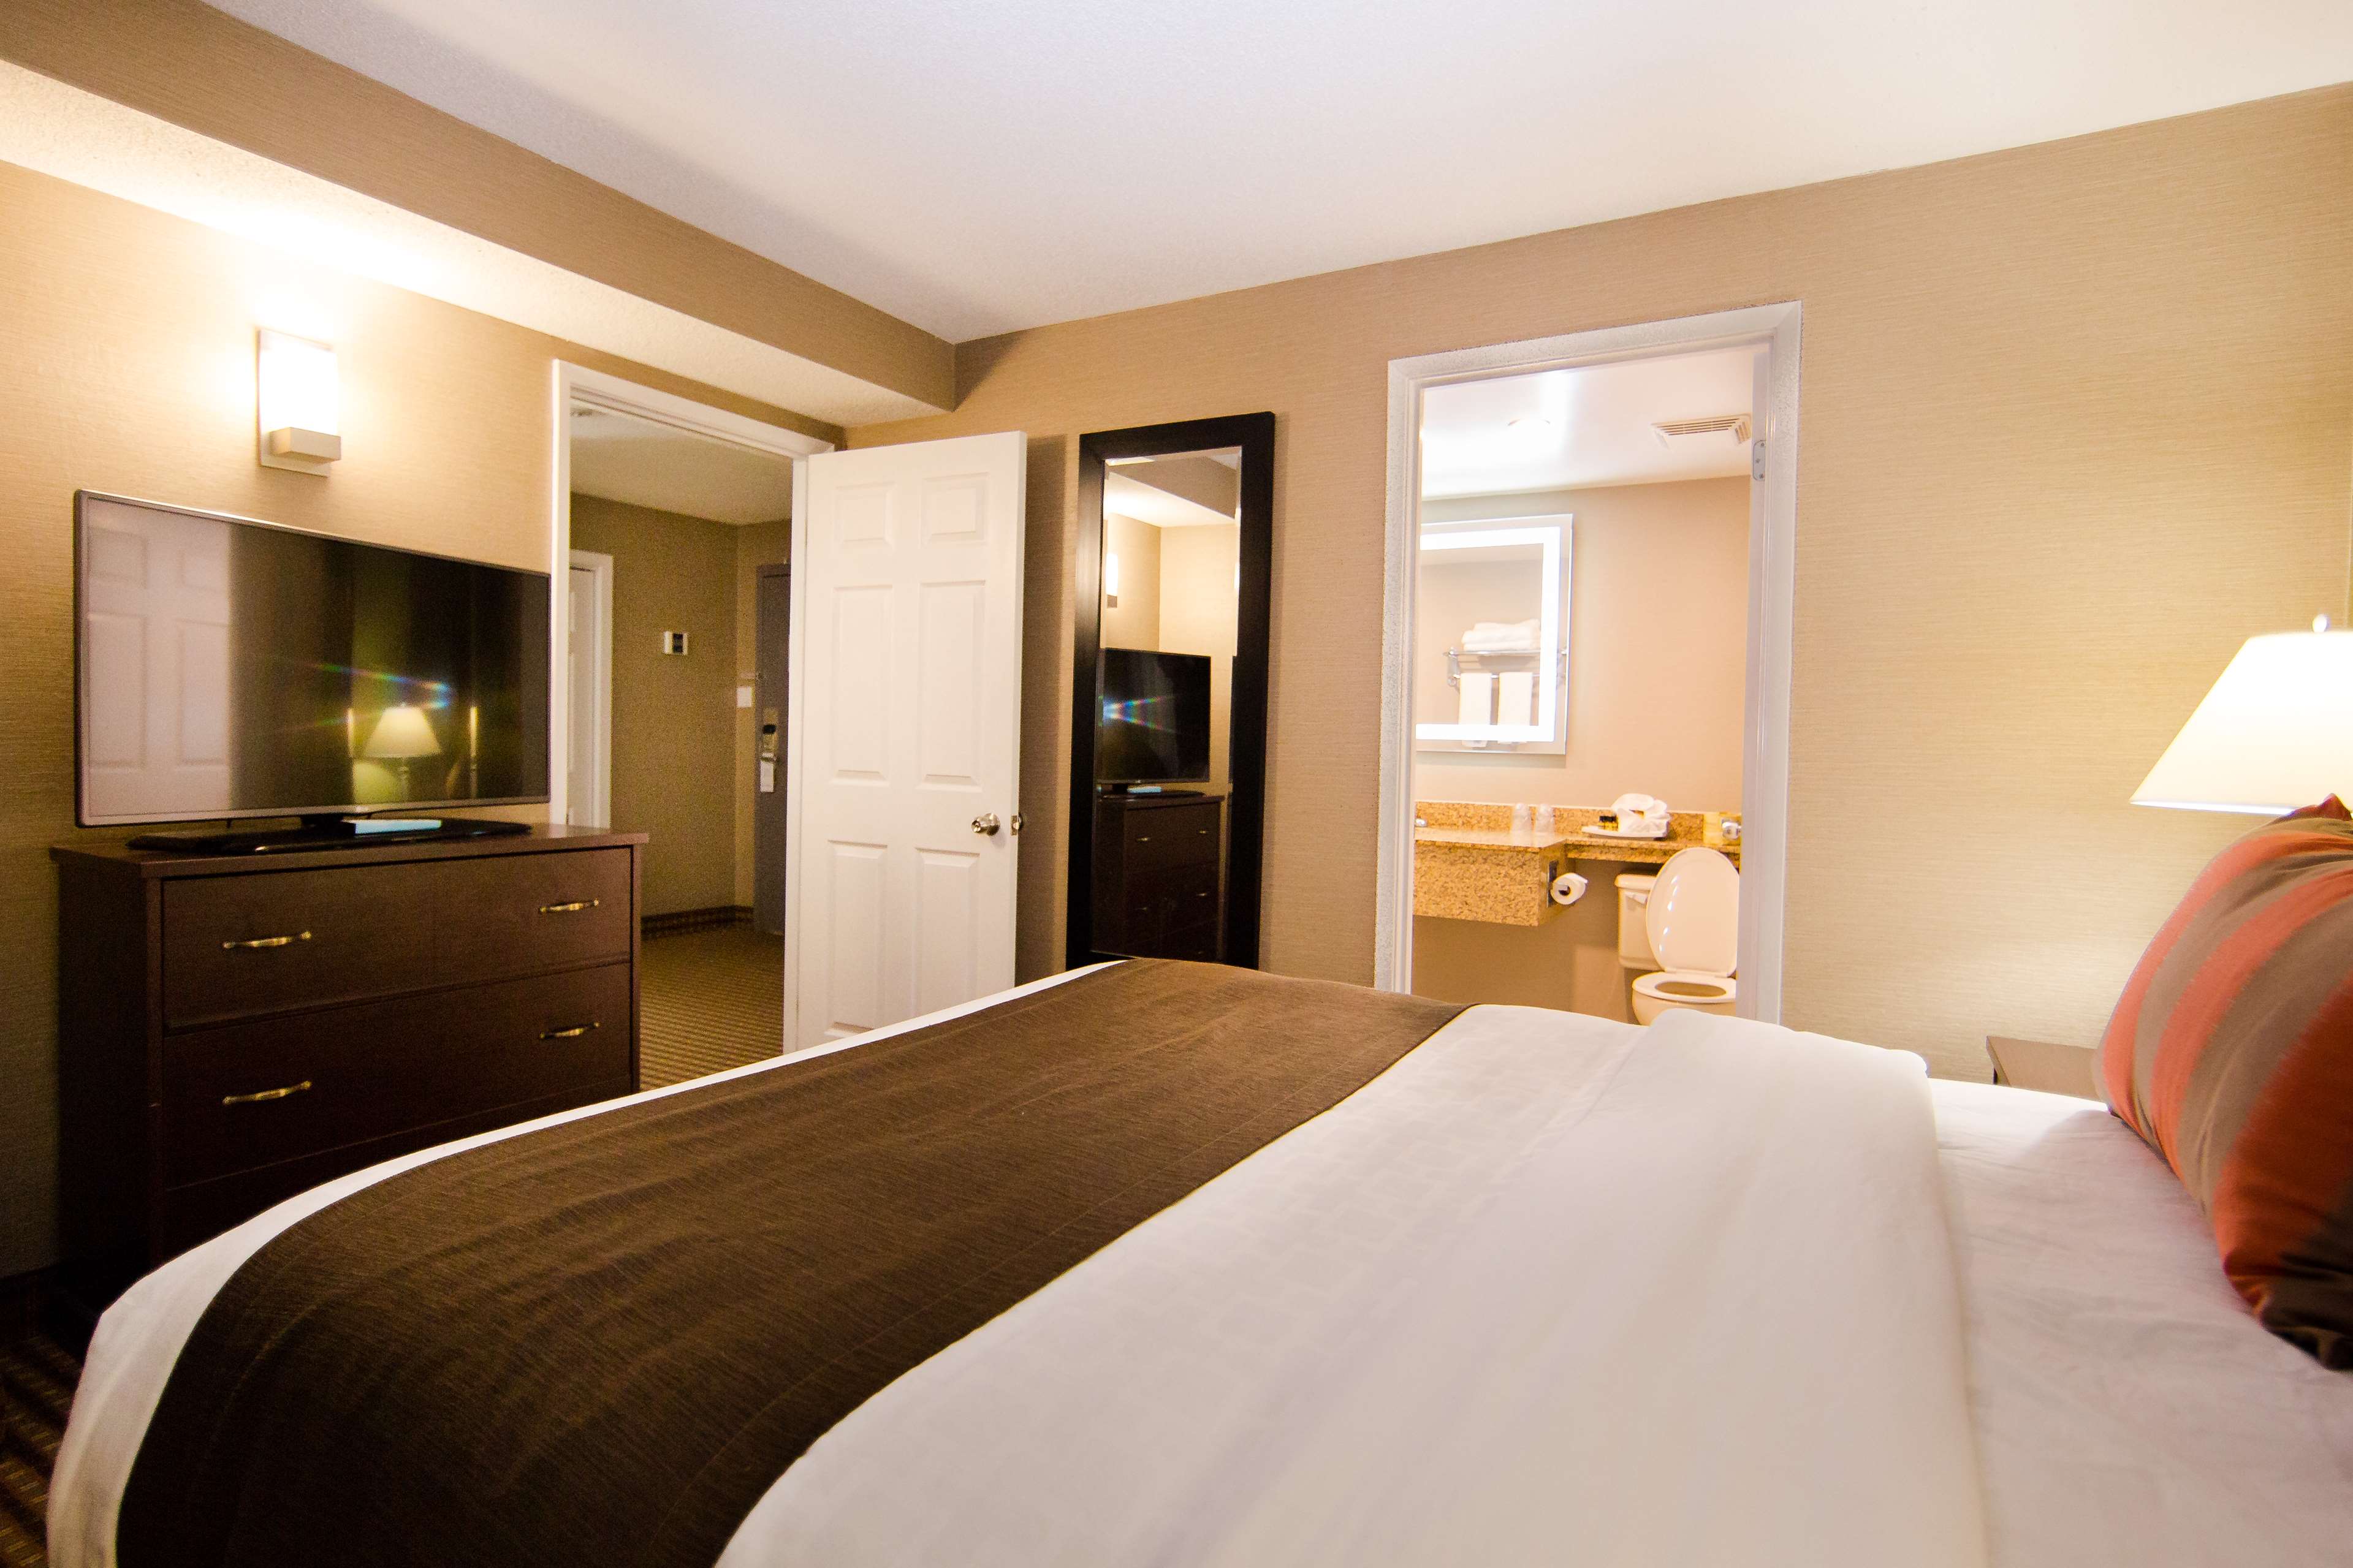 Queen Suite Bedroom Best Western Plus Ottawa Kanata Hotel & Conference Centre Ottawa (613)828-2741